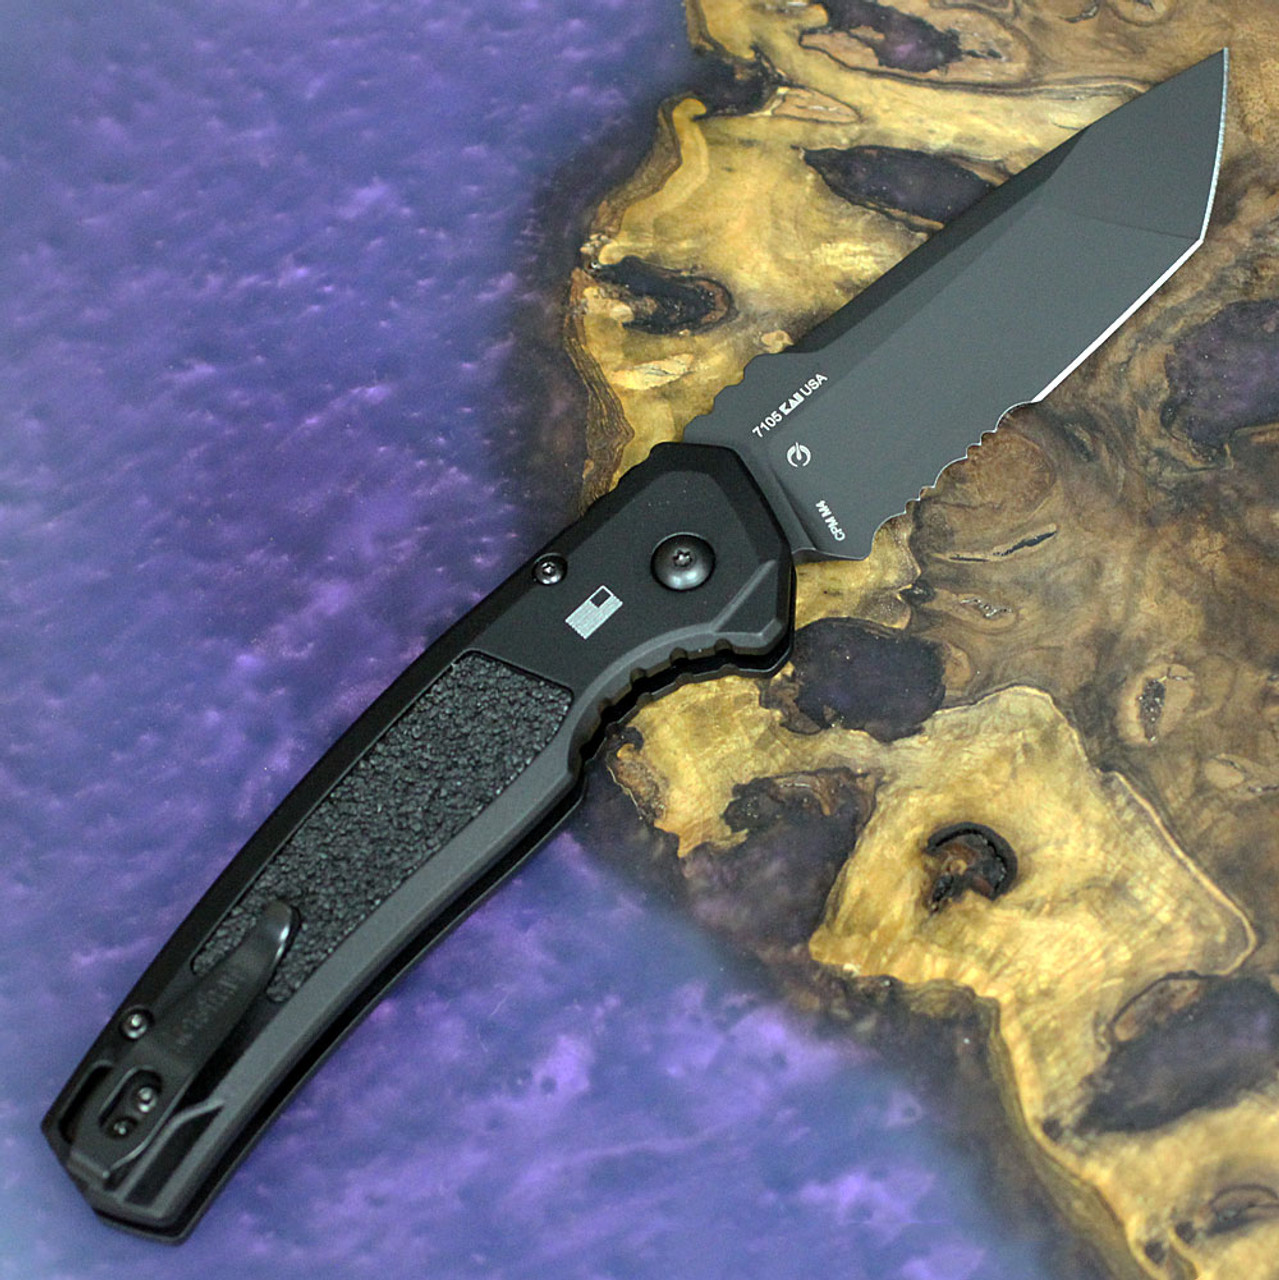 Kershaw Launch 16 Automatic Knife (7105)- 3.45" Black Cerakote CPM-M4 Partially Serrated Tanto Blade, Black Aluminum Handle w/ Trac-Tec Inserts